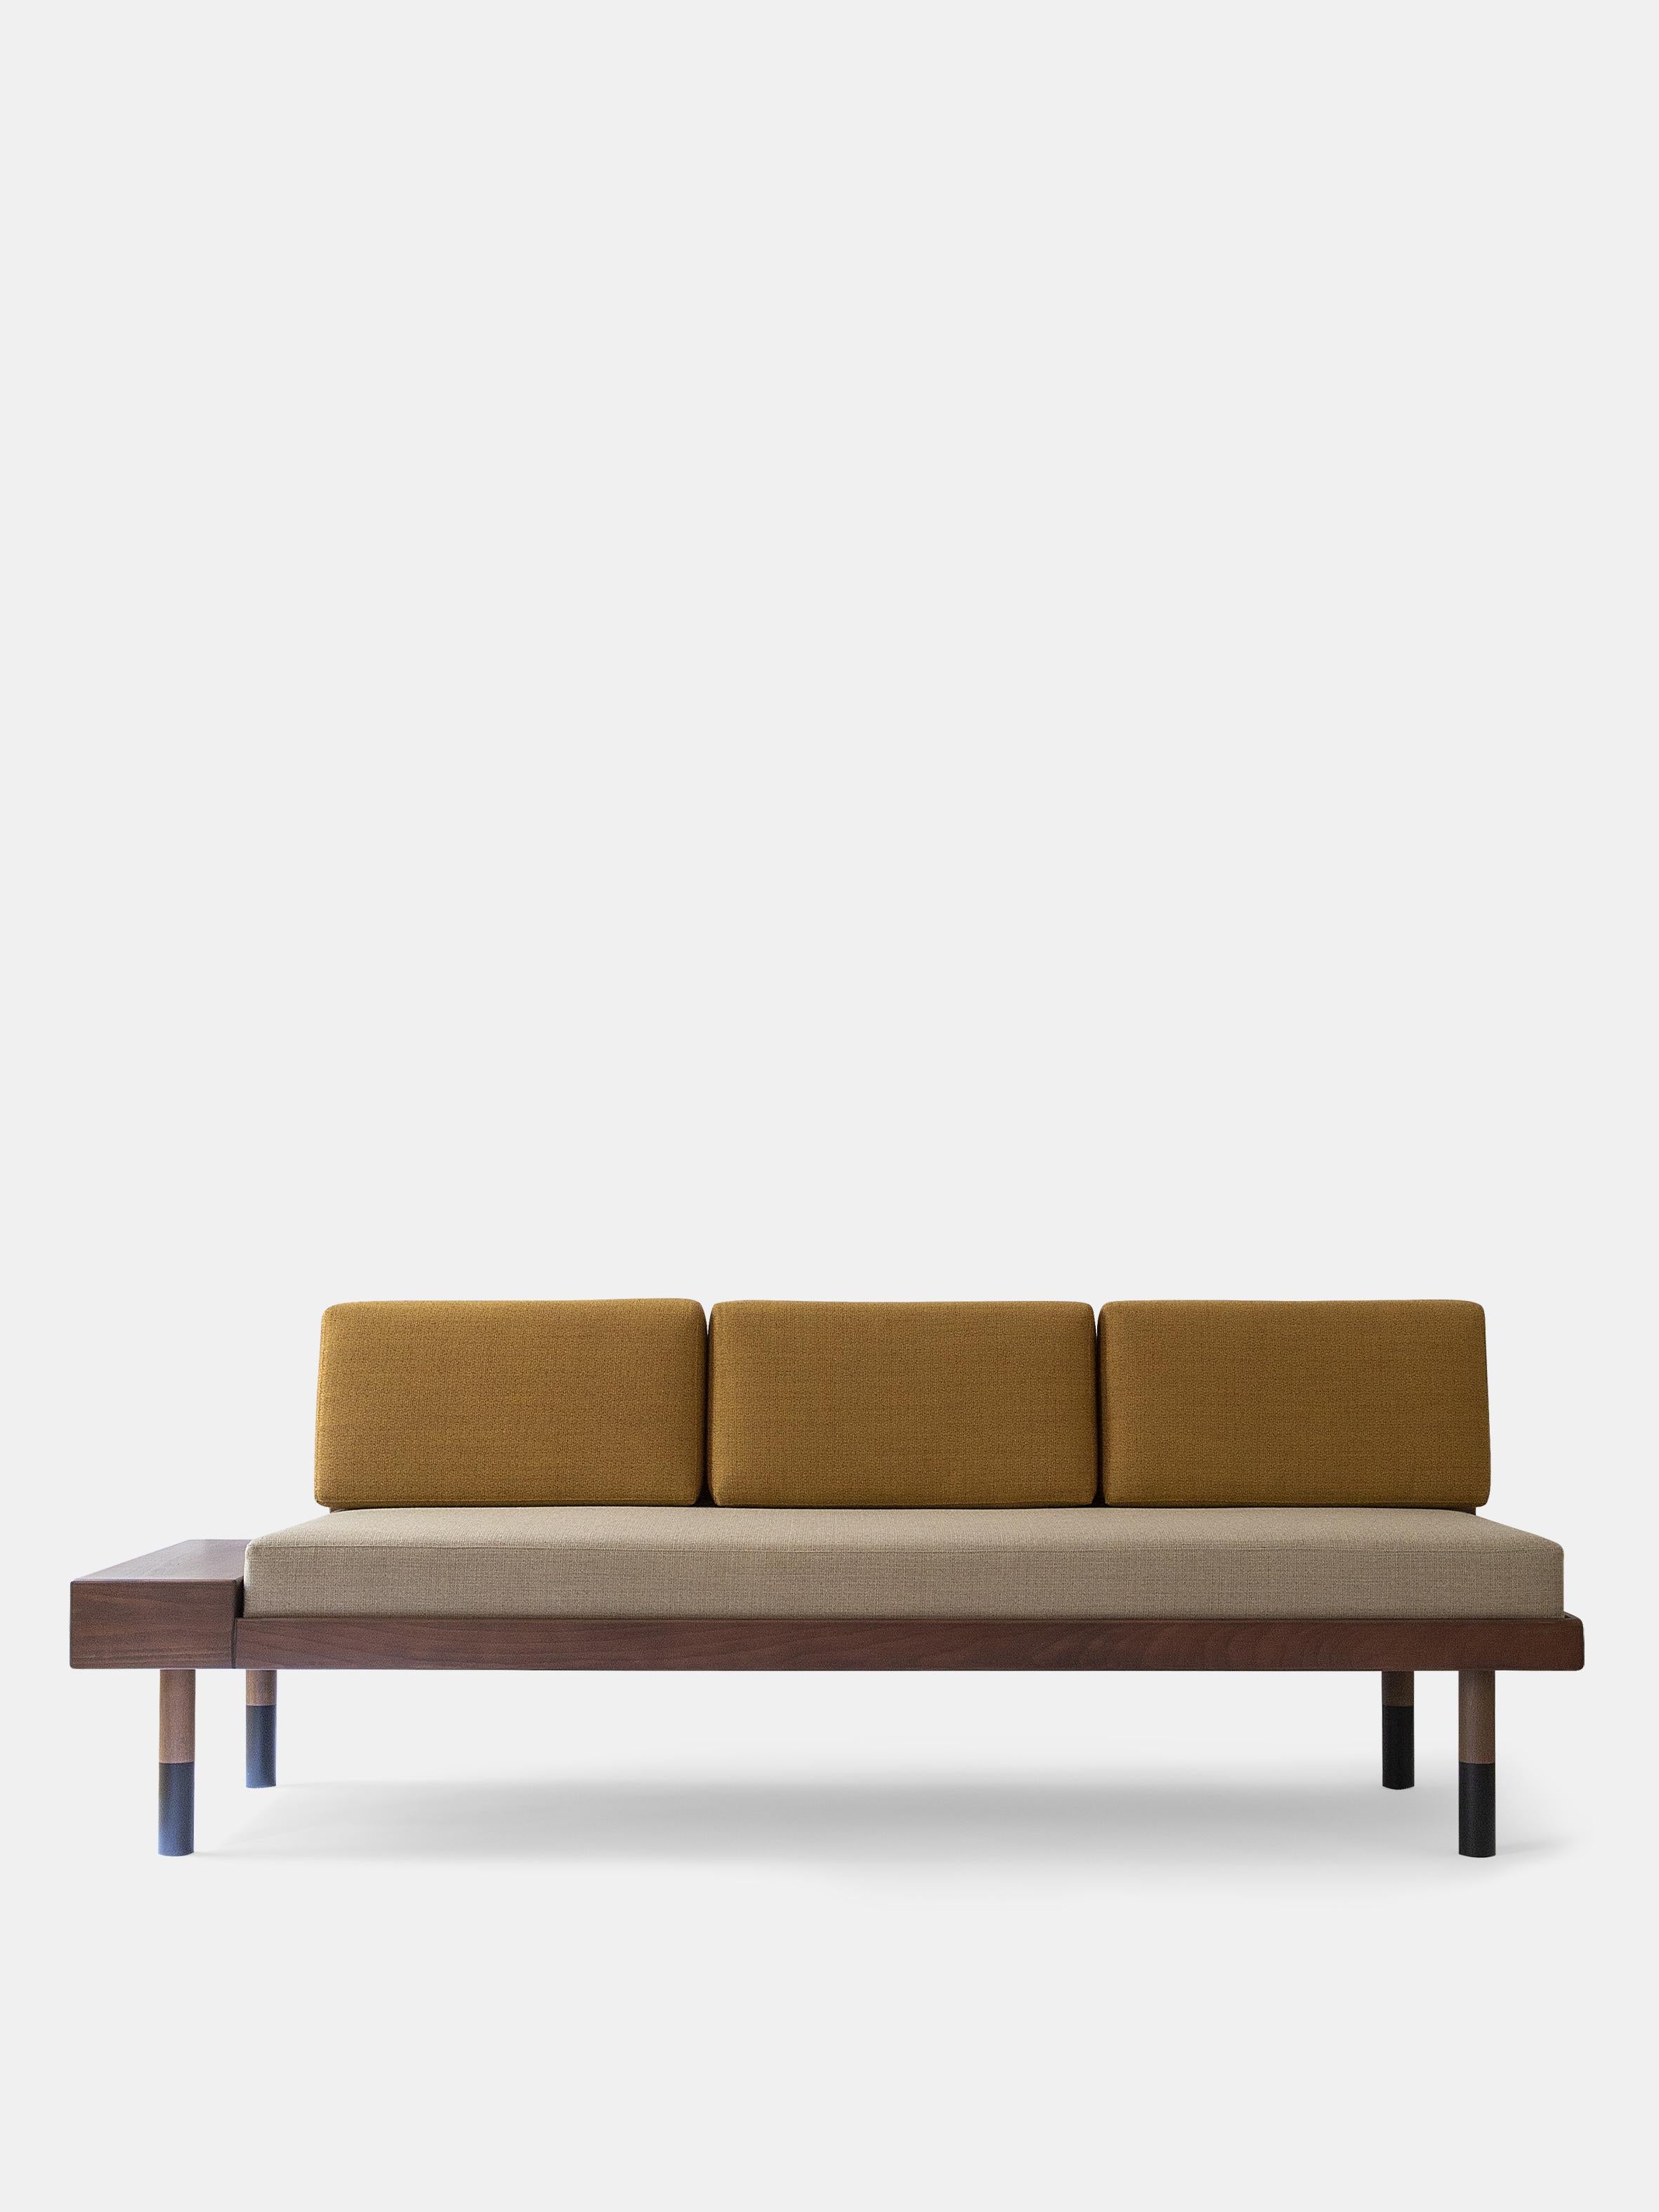 Beige and Ochre Mid Sofa by Kann Design
Dimensions: D 70 x W 200 x H 74 cm.
Materials: Solid wood, steel, wood veneer, HR foam, fabric upholstery - seating: Kvadrat Foss 232 - back: Kvadrat Foss 472 (76% wool, 11% viscose, 8% nylon, 5%